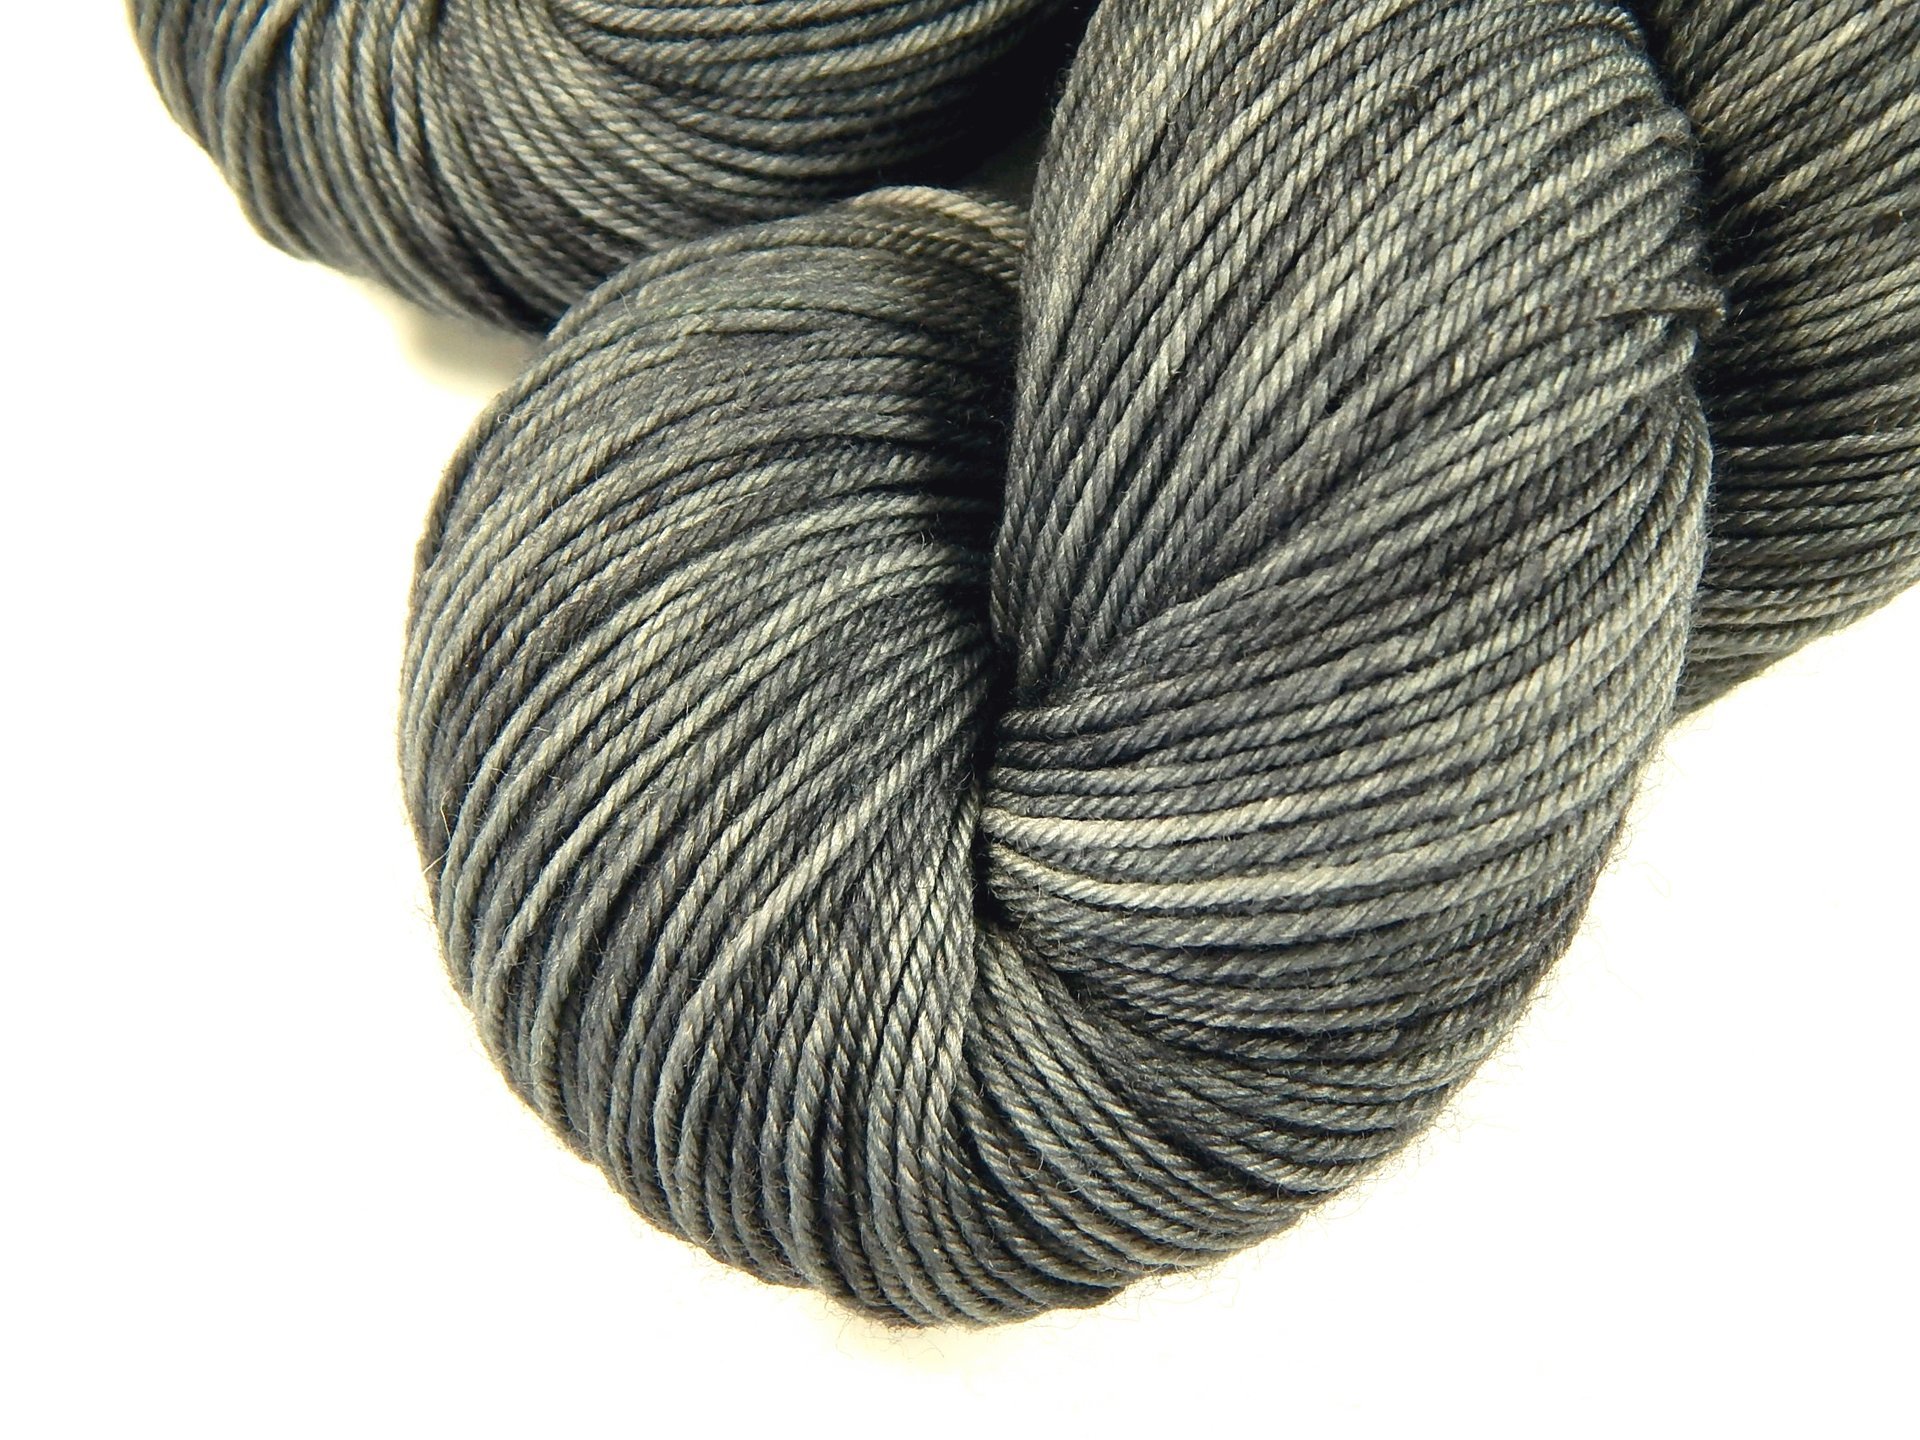 Hand Dyed Sock Yarn, Fingering Weight 4 Ply 100% Superwash Merino Wool - Pewter - Indie Dyed Knitting Yarn, Neutral Tonal Medium Grey Gray 